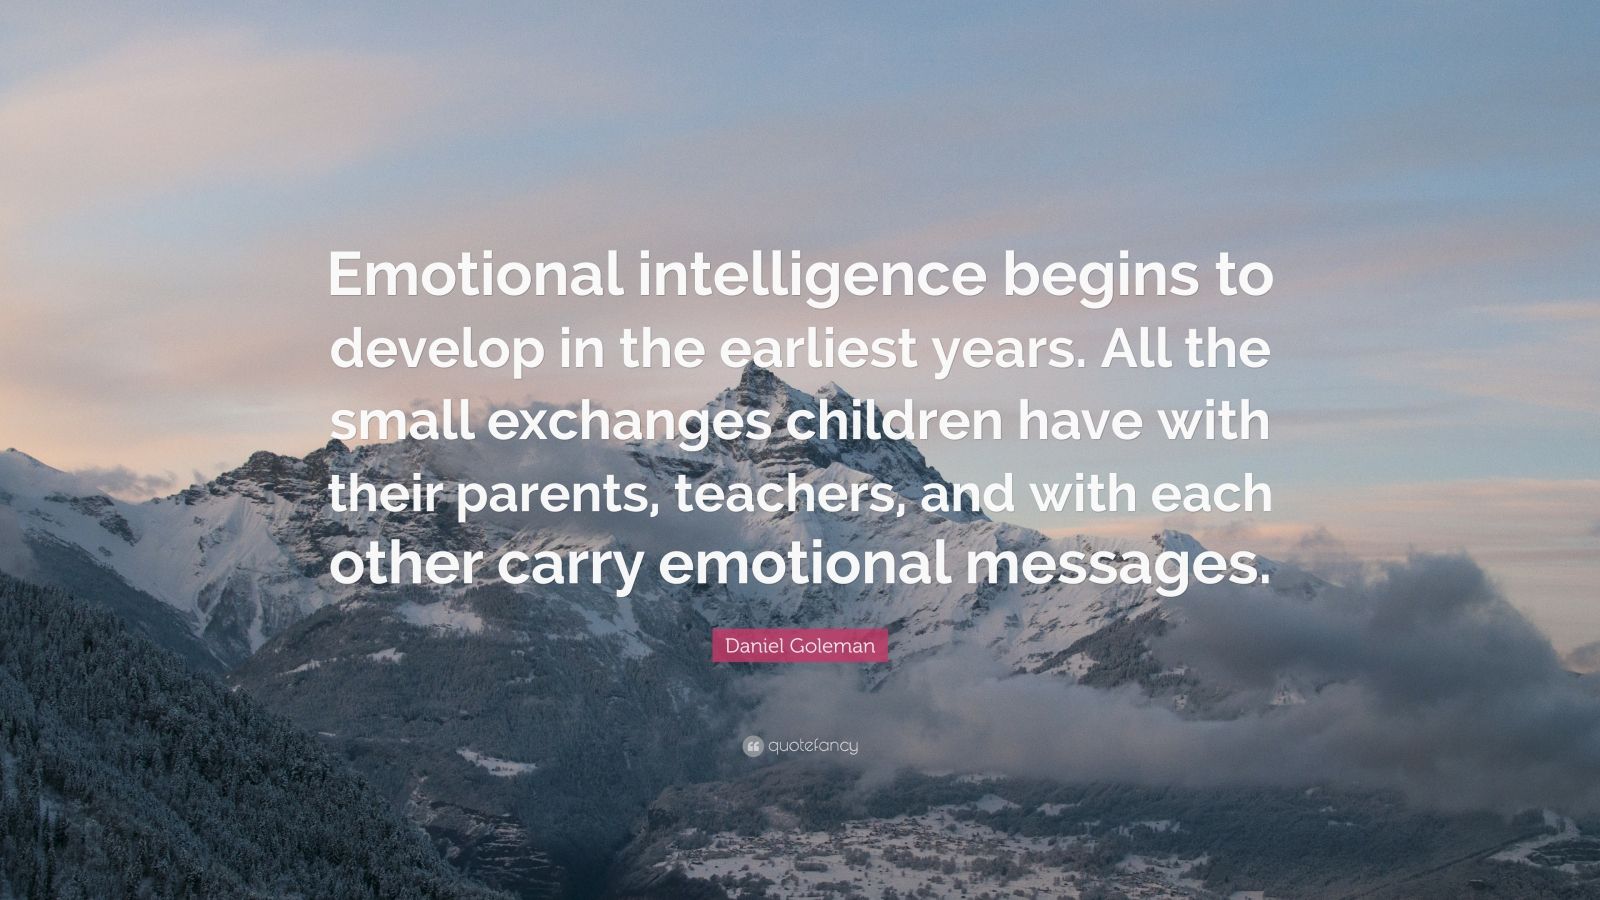 Daniel Goleman Quote “Emotional intelligence begins to